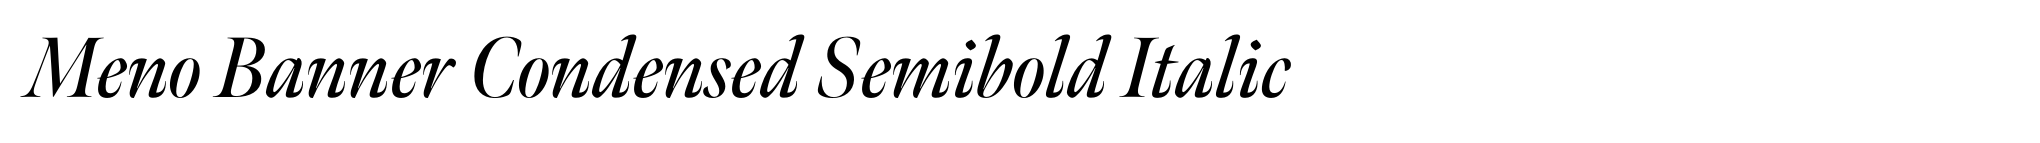 Meno Banner Condensed Semibold Italic image